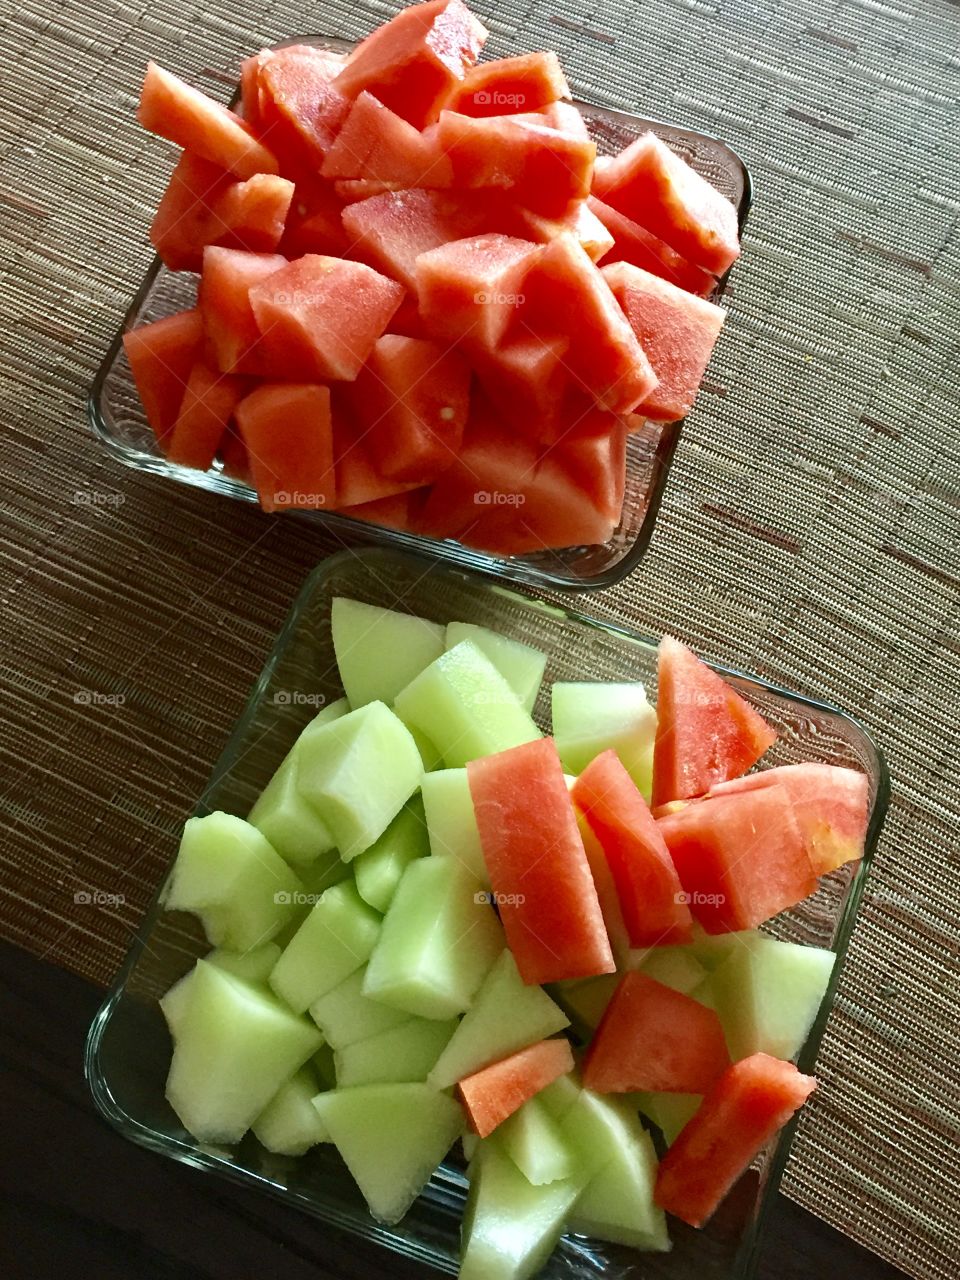 Watermelon and melon 